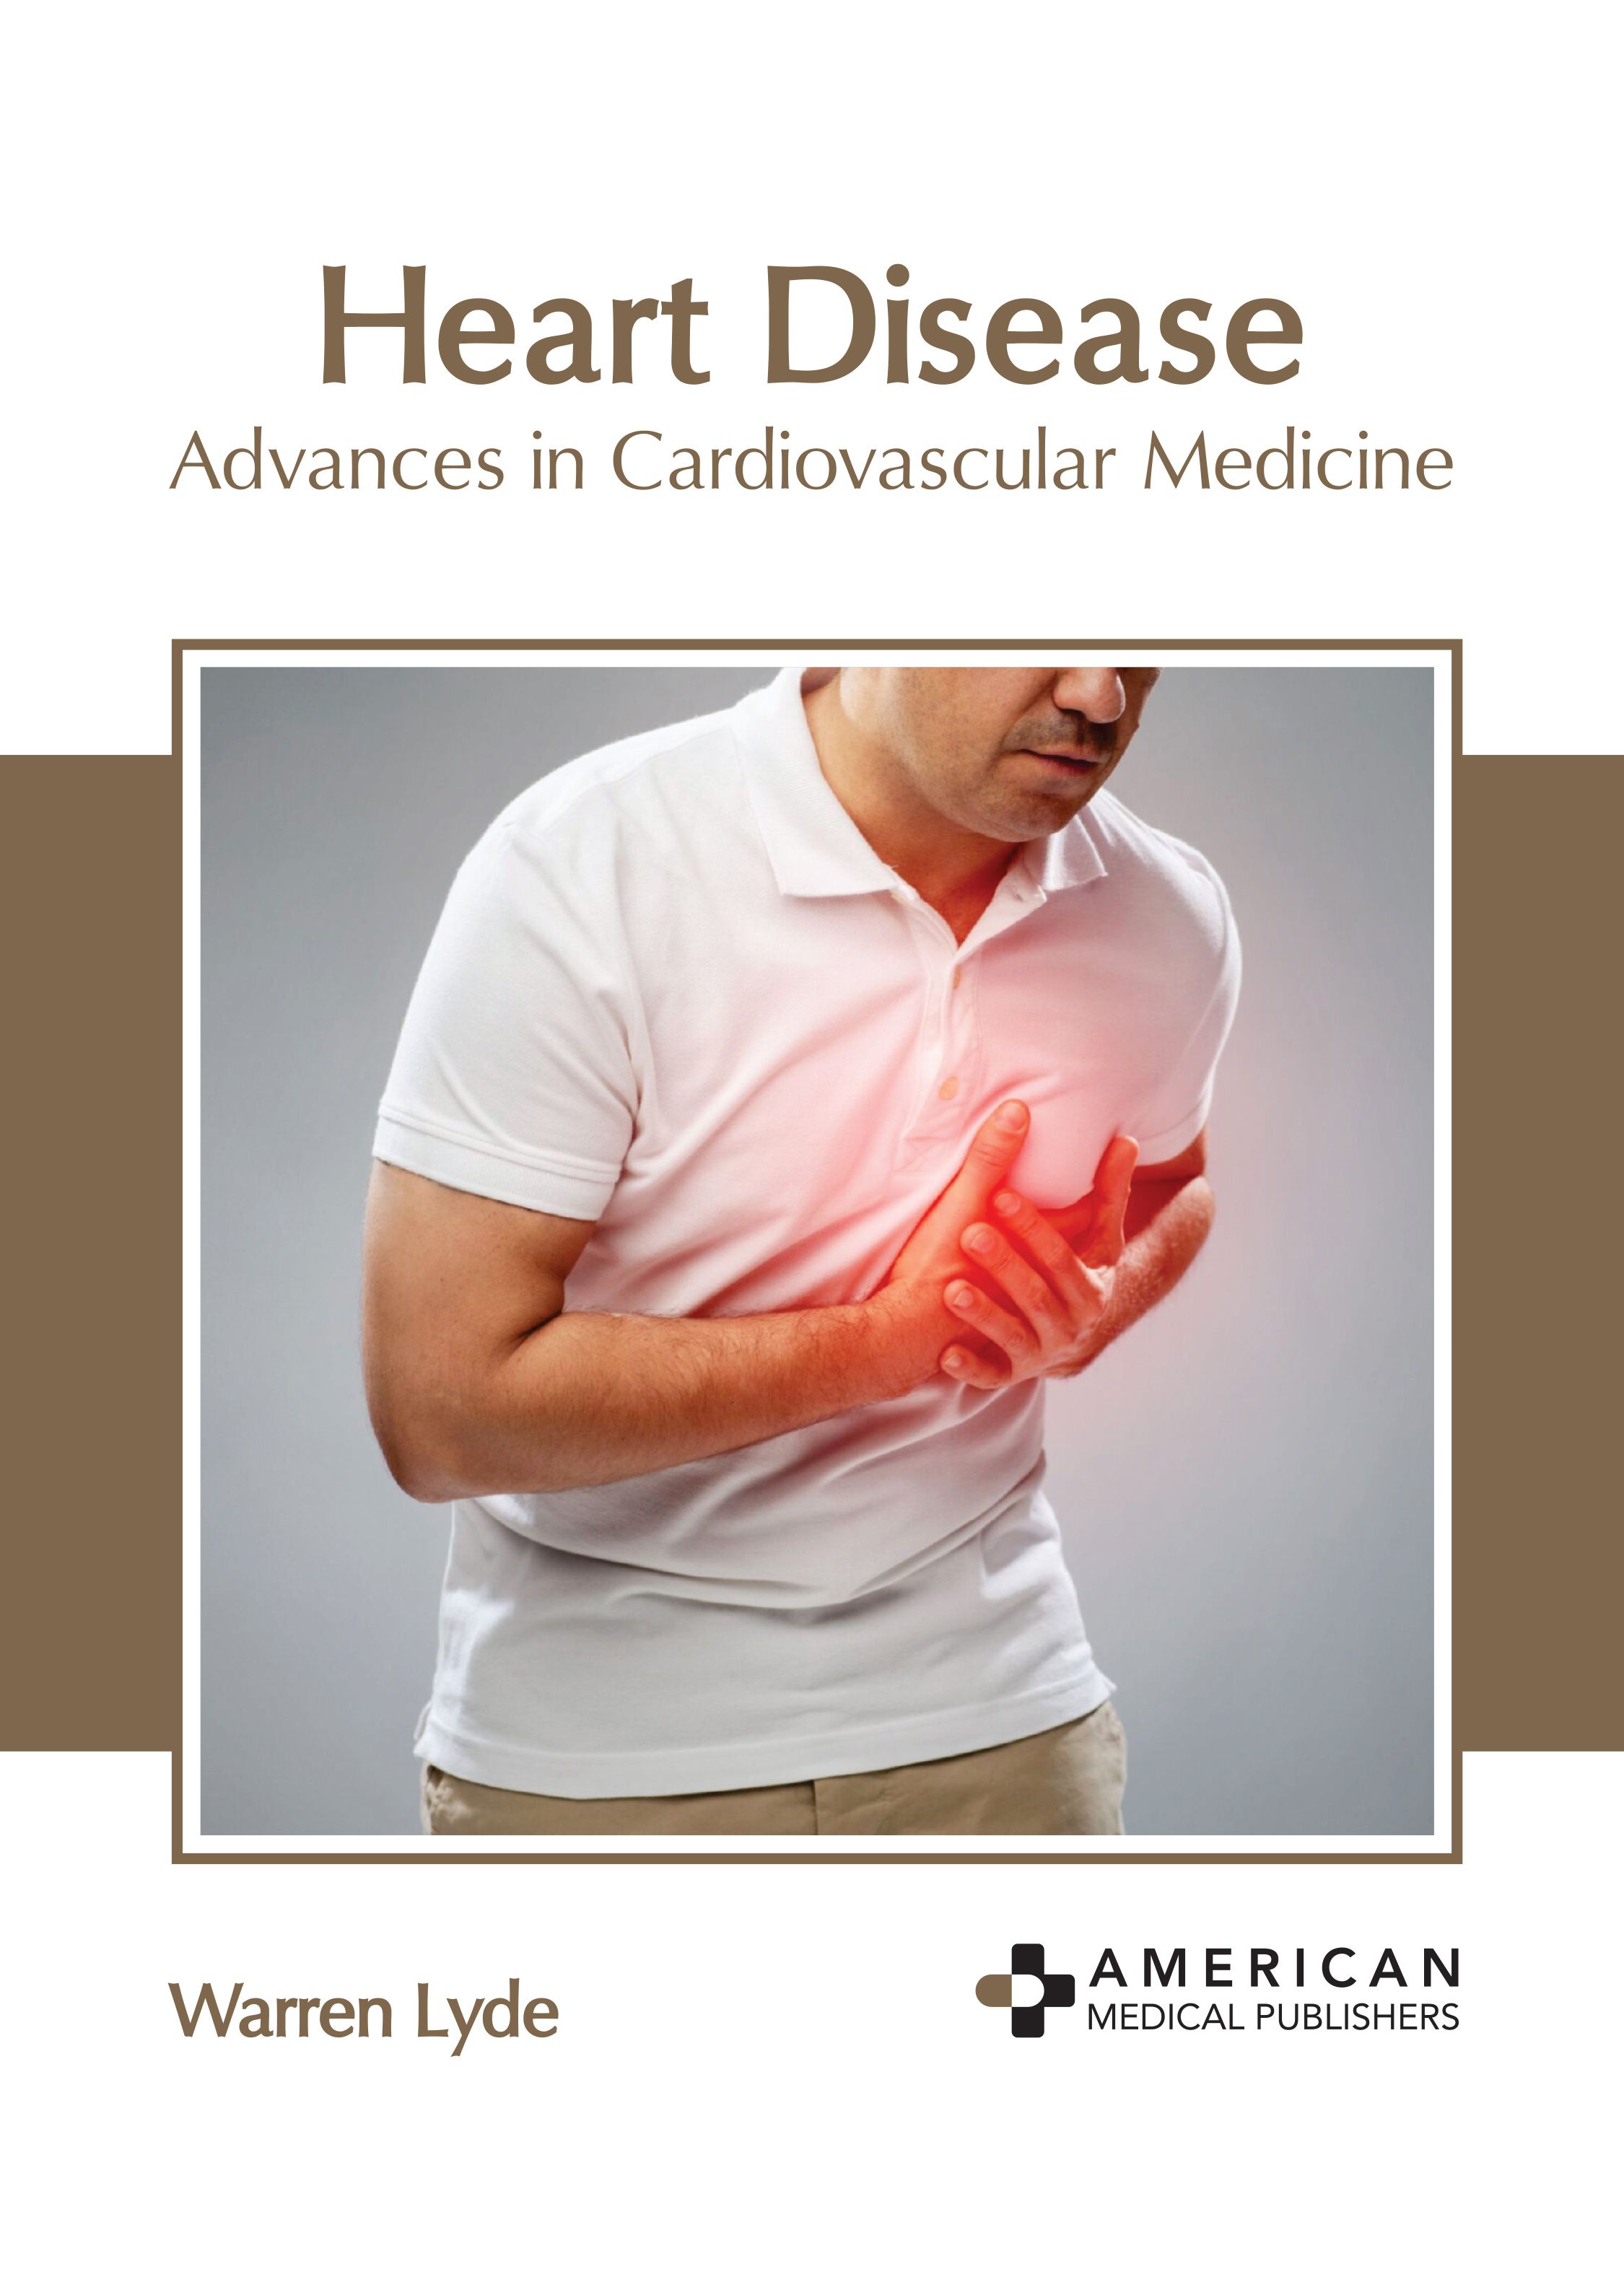 HEART DISEASE: ADVANCES IN CARDIOVASCULAR MEDICINE